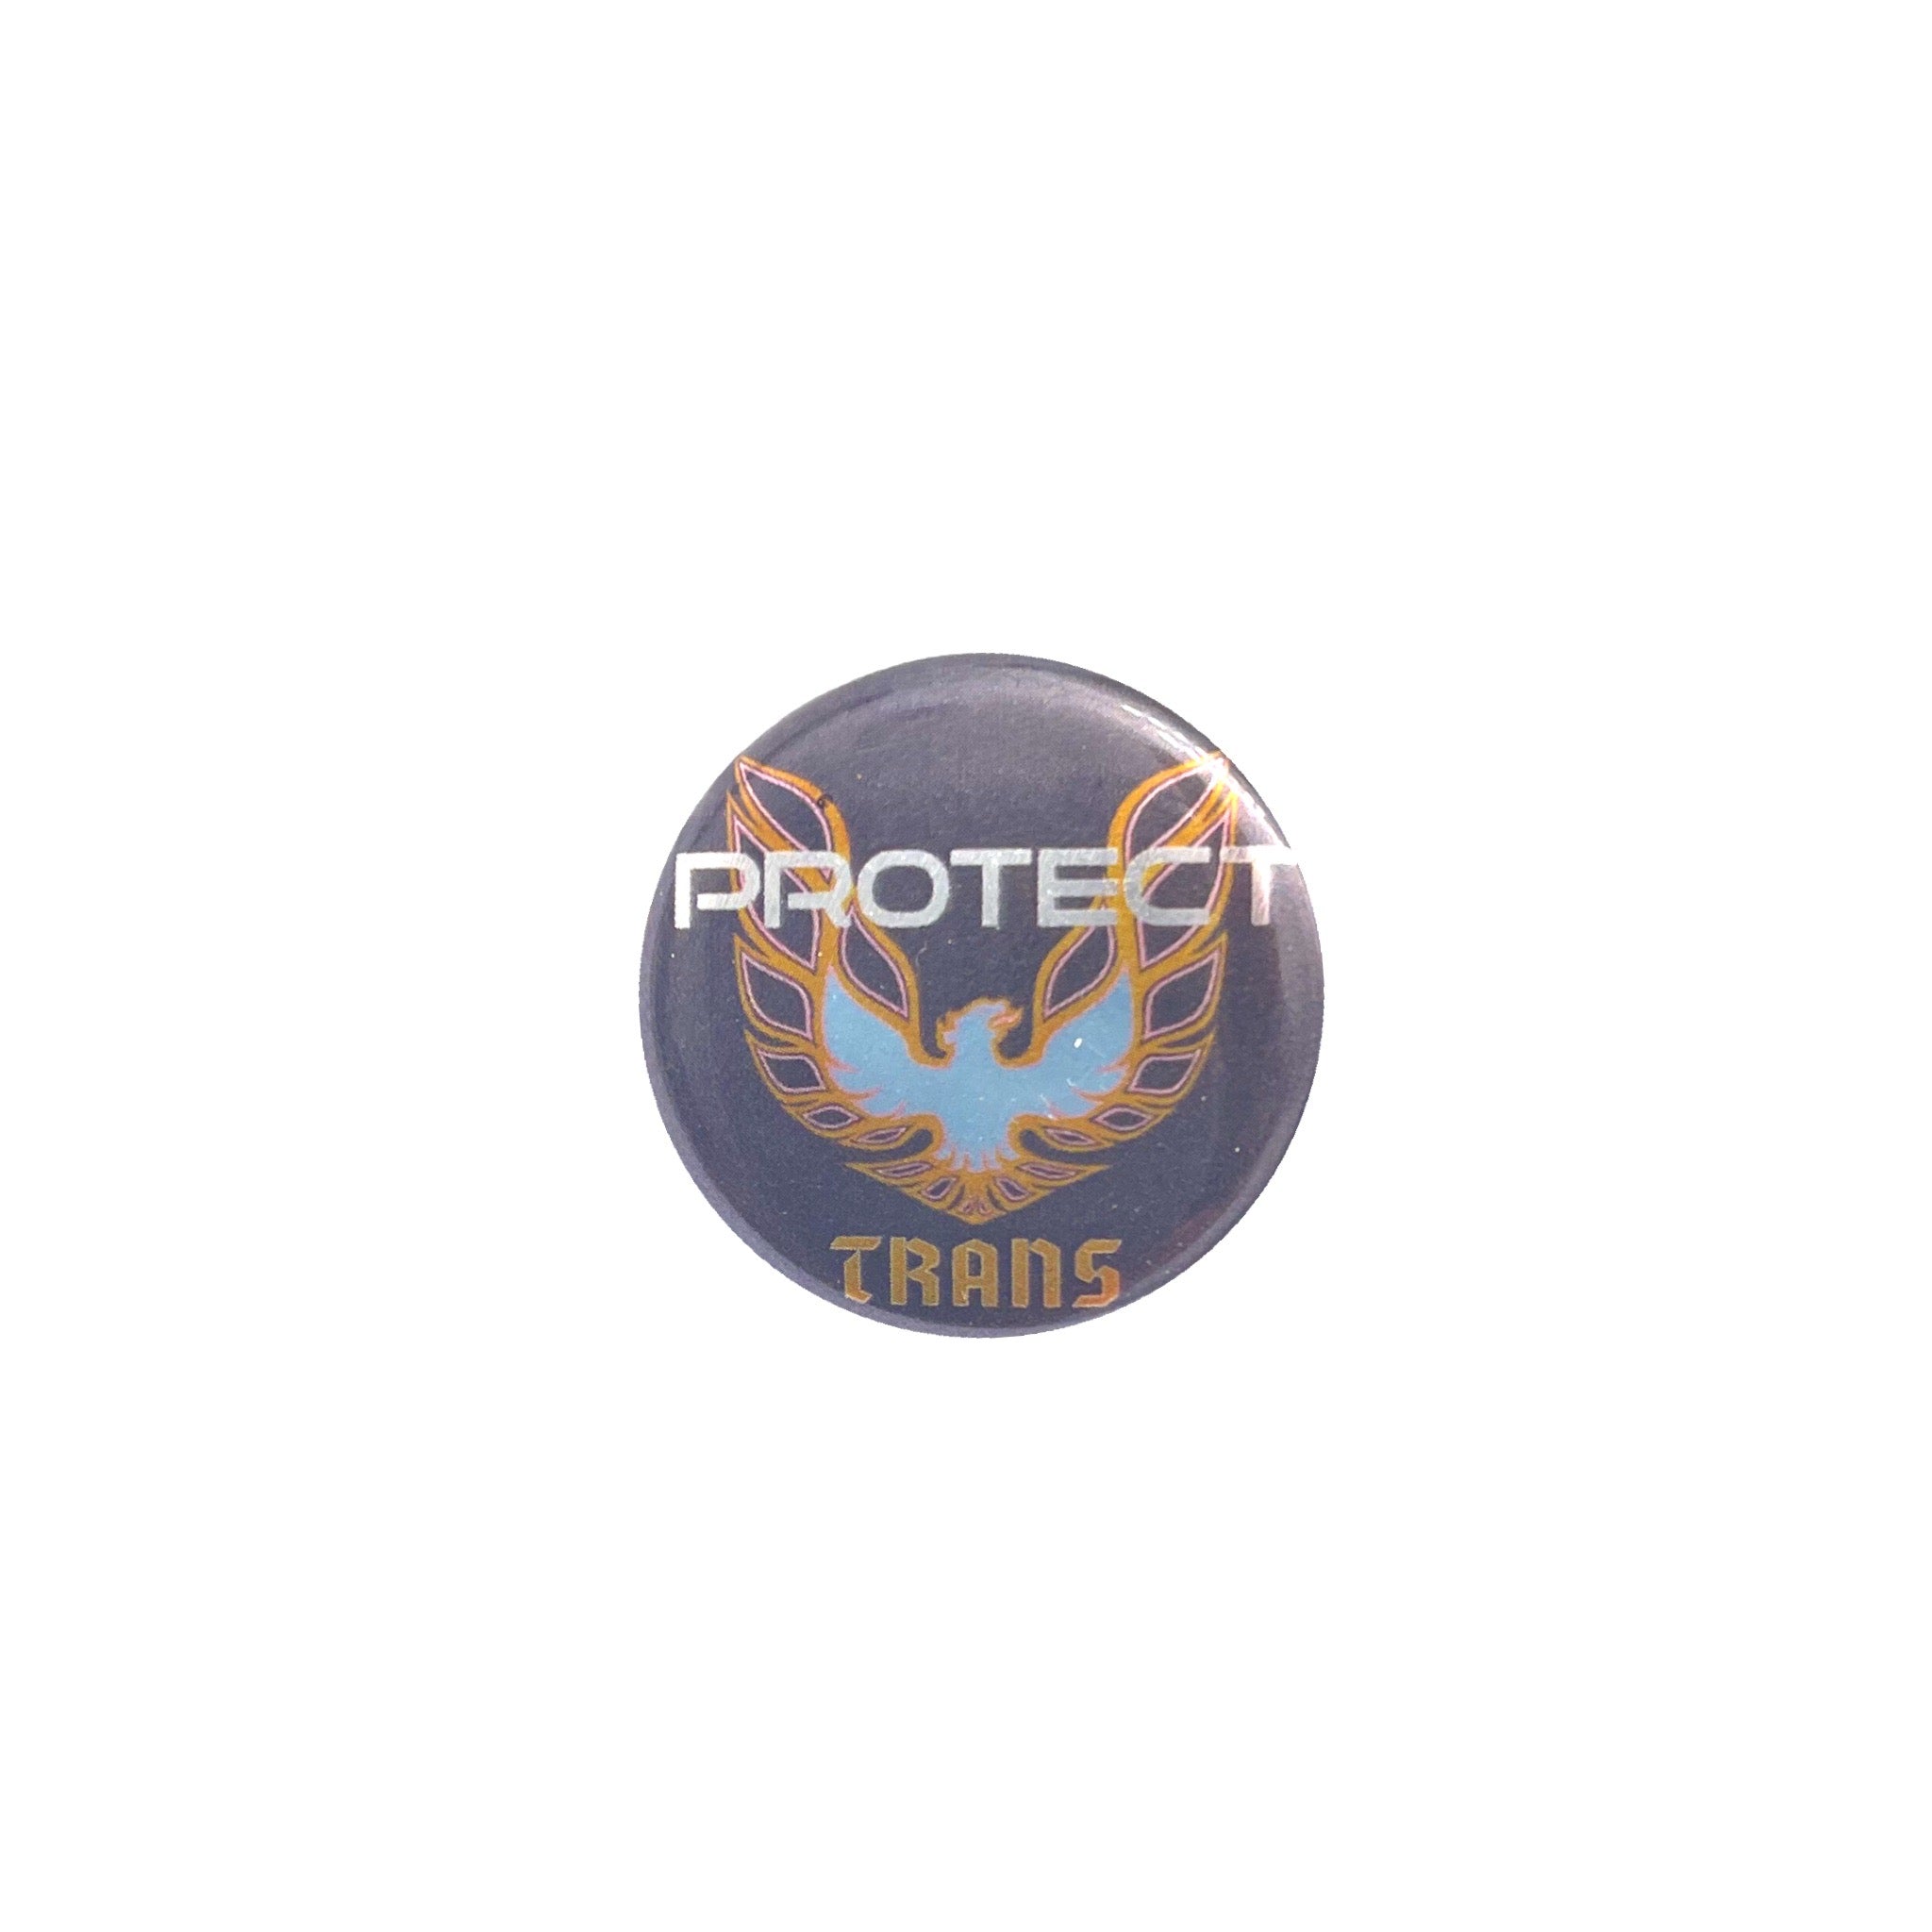 Protect Trans Tin Pin